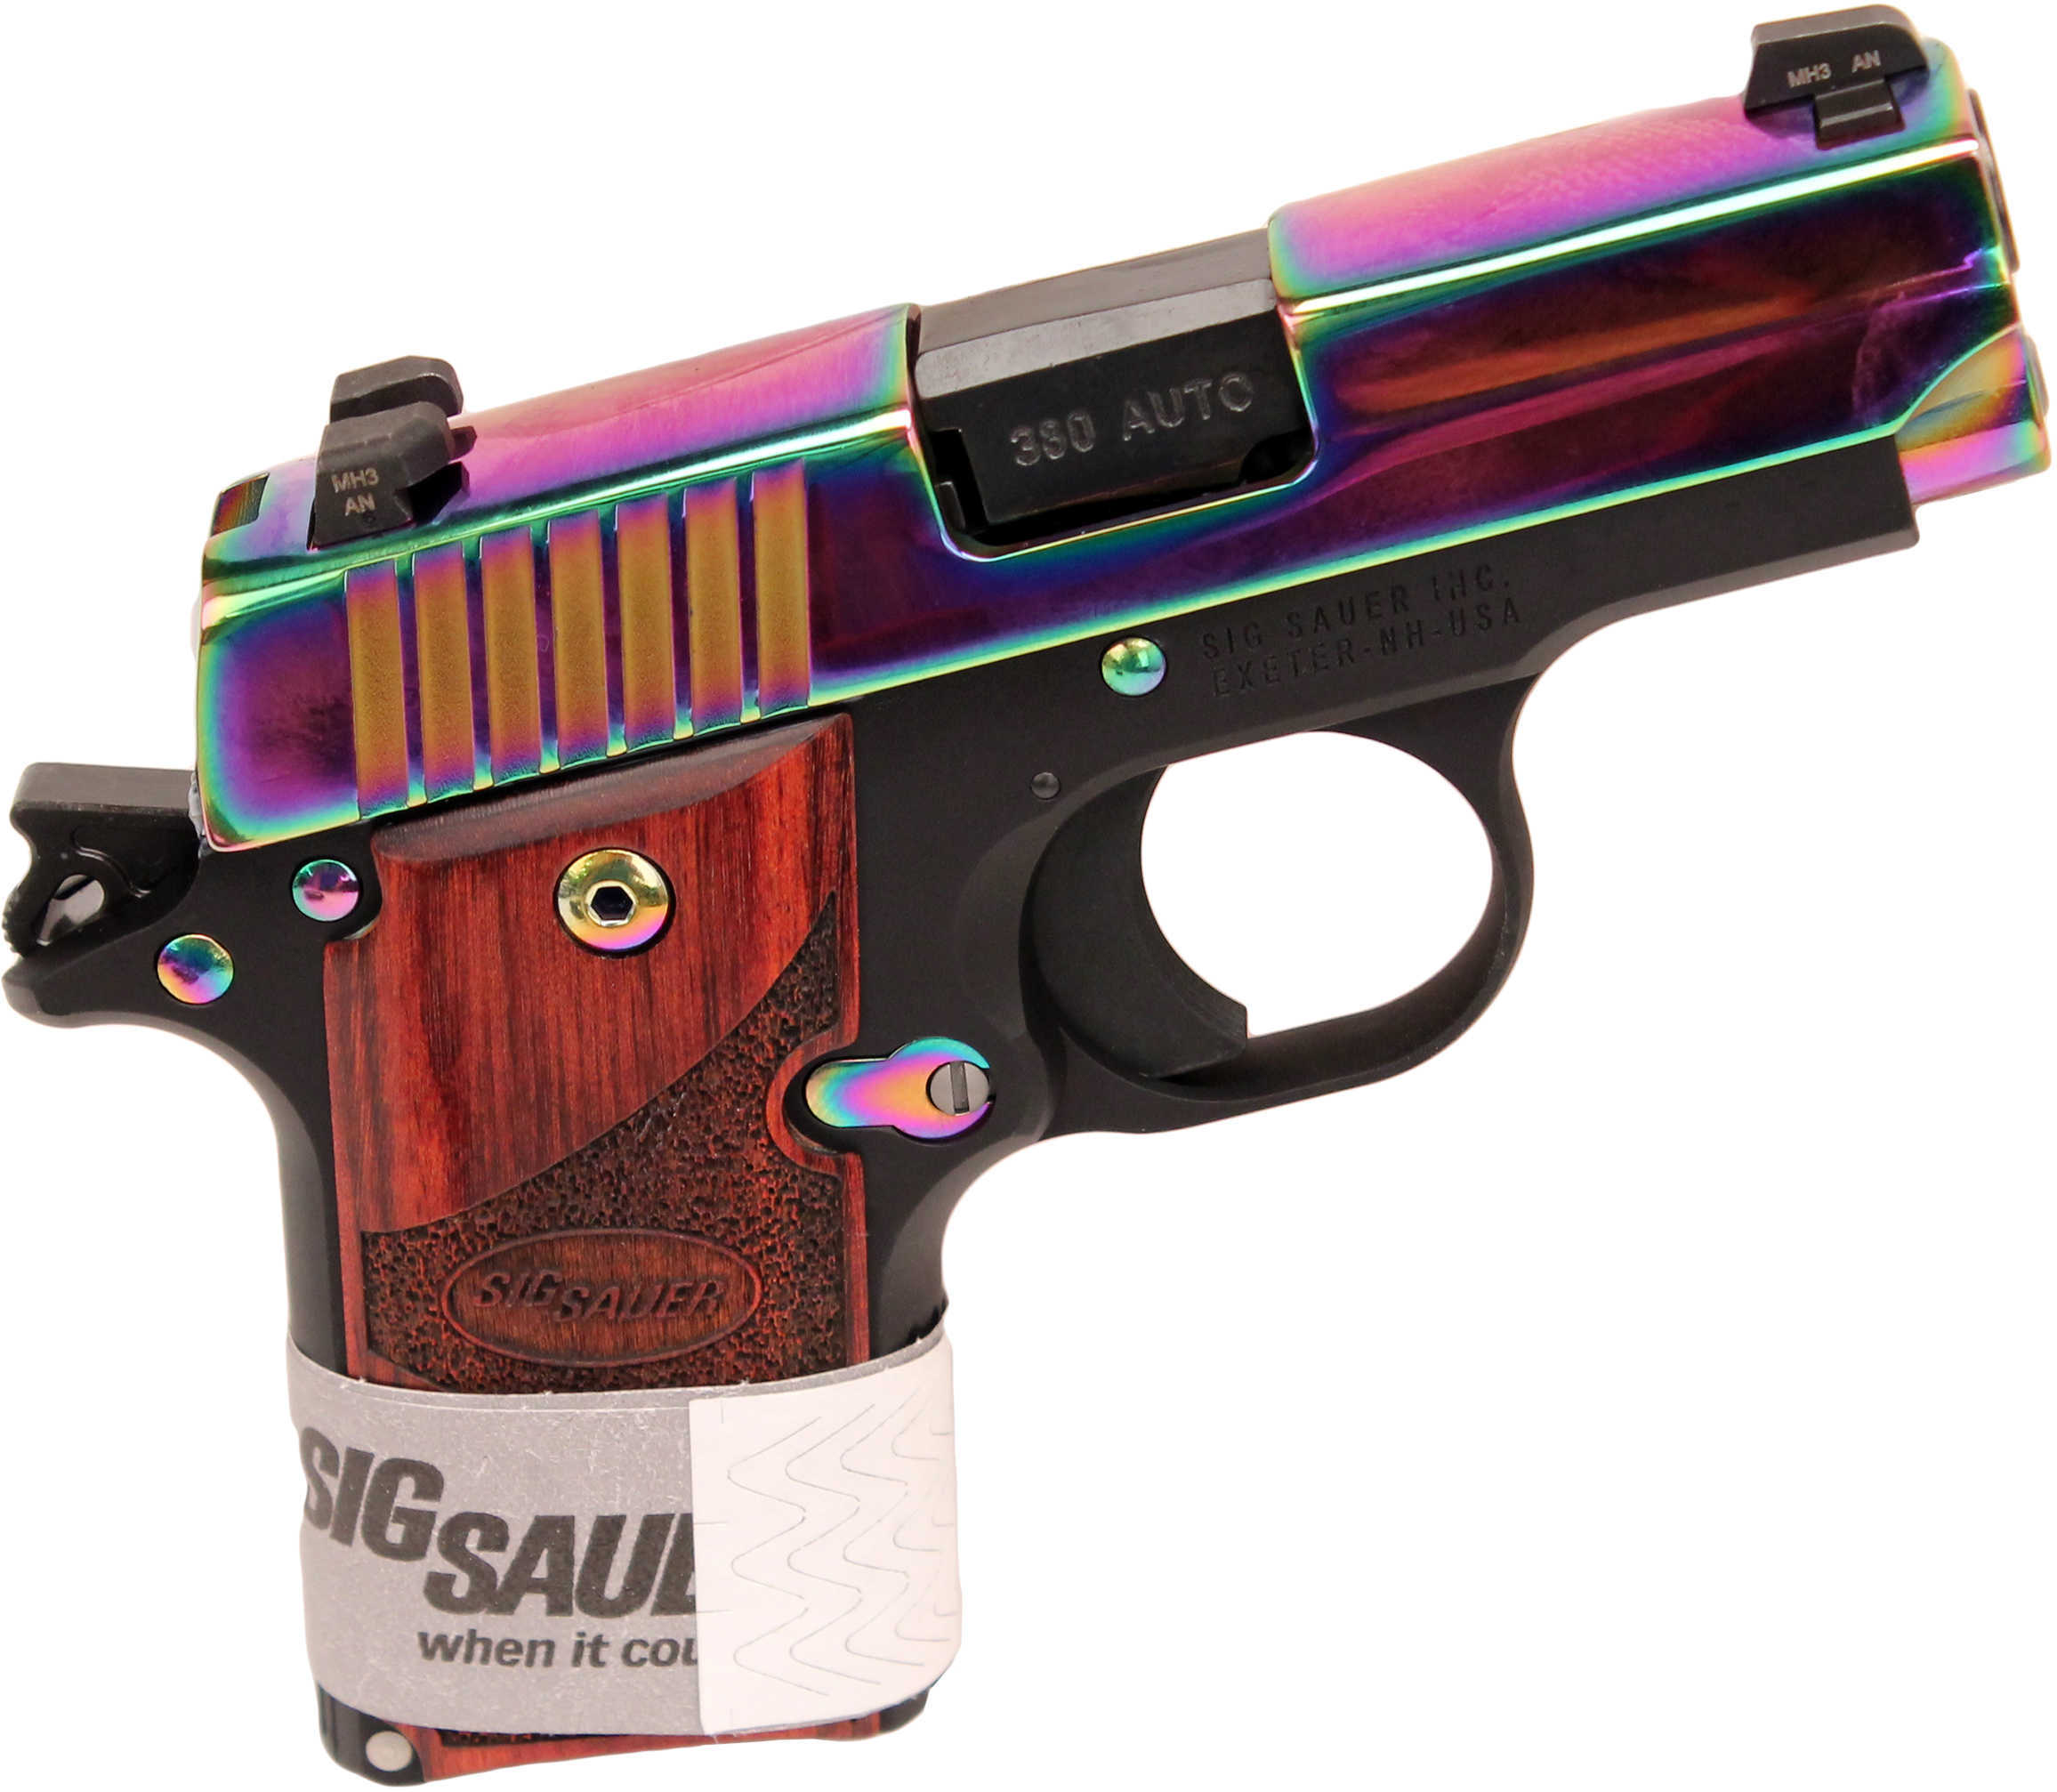 Sig Sauer P238 380 ACP Rainbow Titanium Slide Wood Grip 6 Round Semi Automatic Pistol 238380RBT